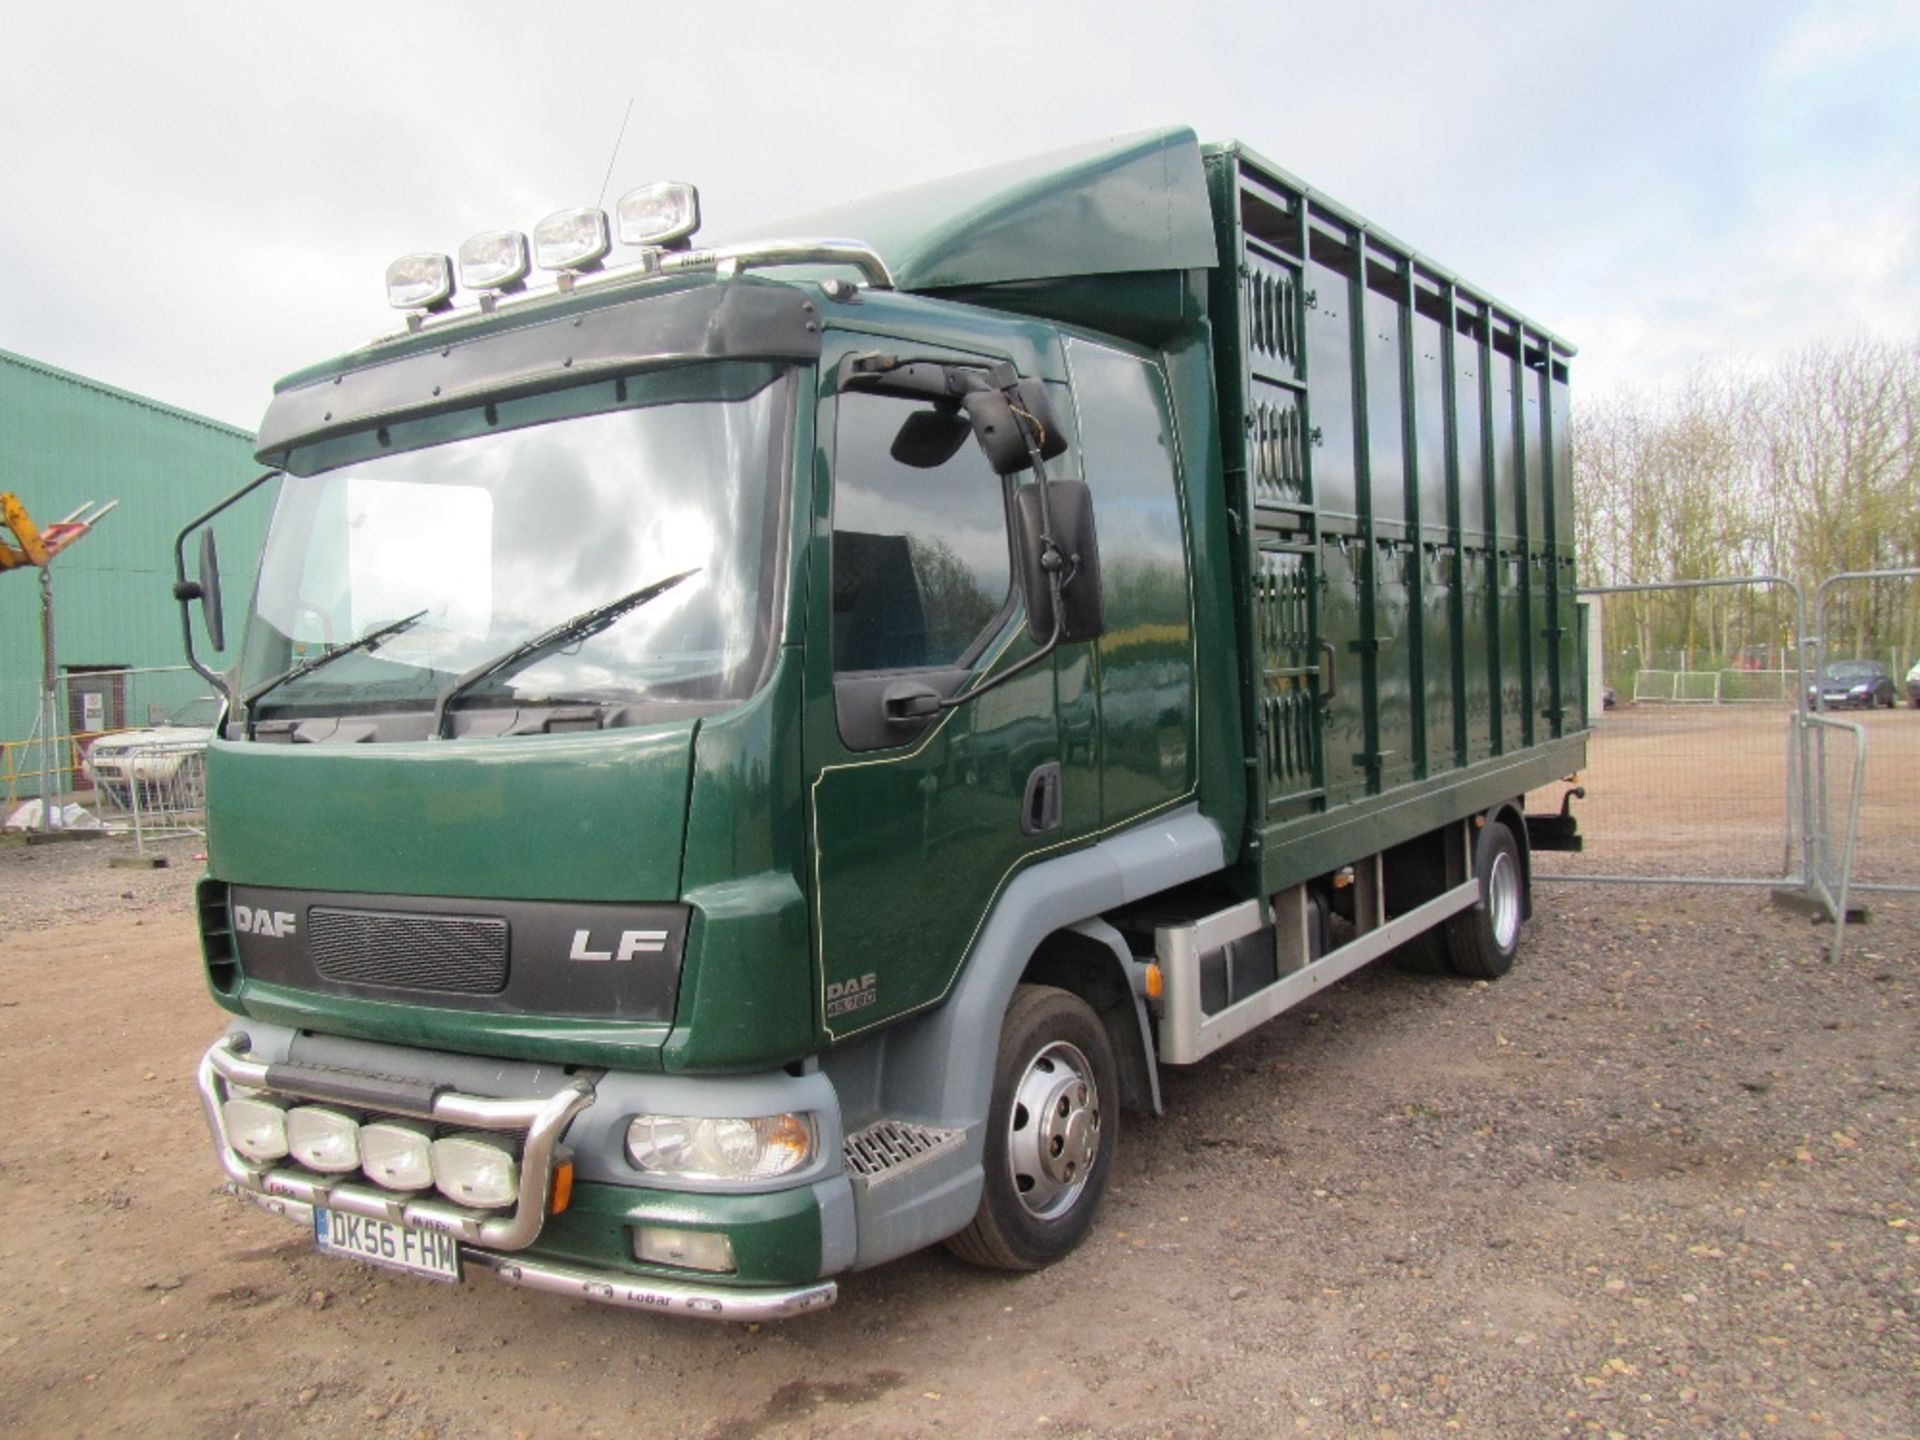 Daf 7.5 Ton Livestock Lorry c/w Sleeper Cab. Reg Docs will be supplied. MOT till Dec 17 Reg. No.